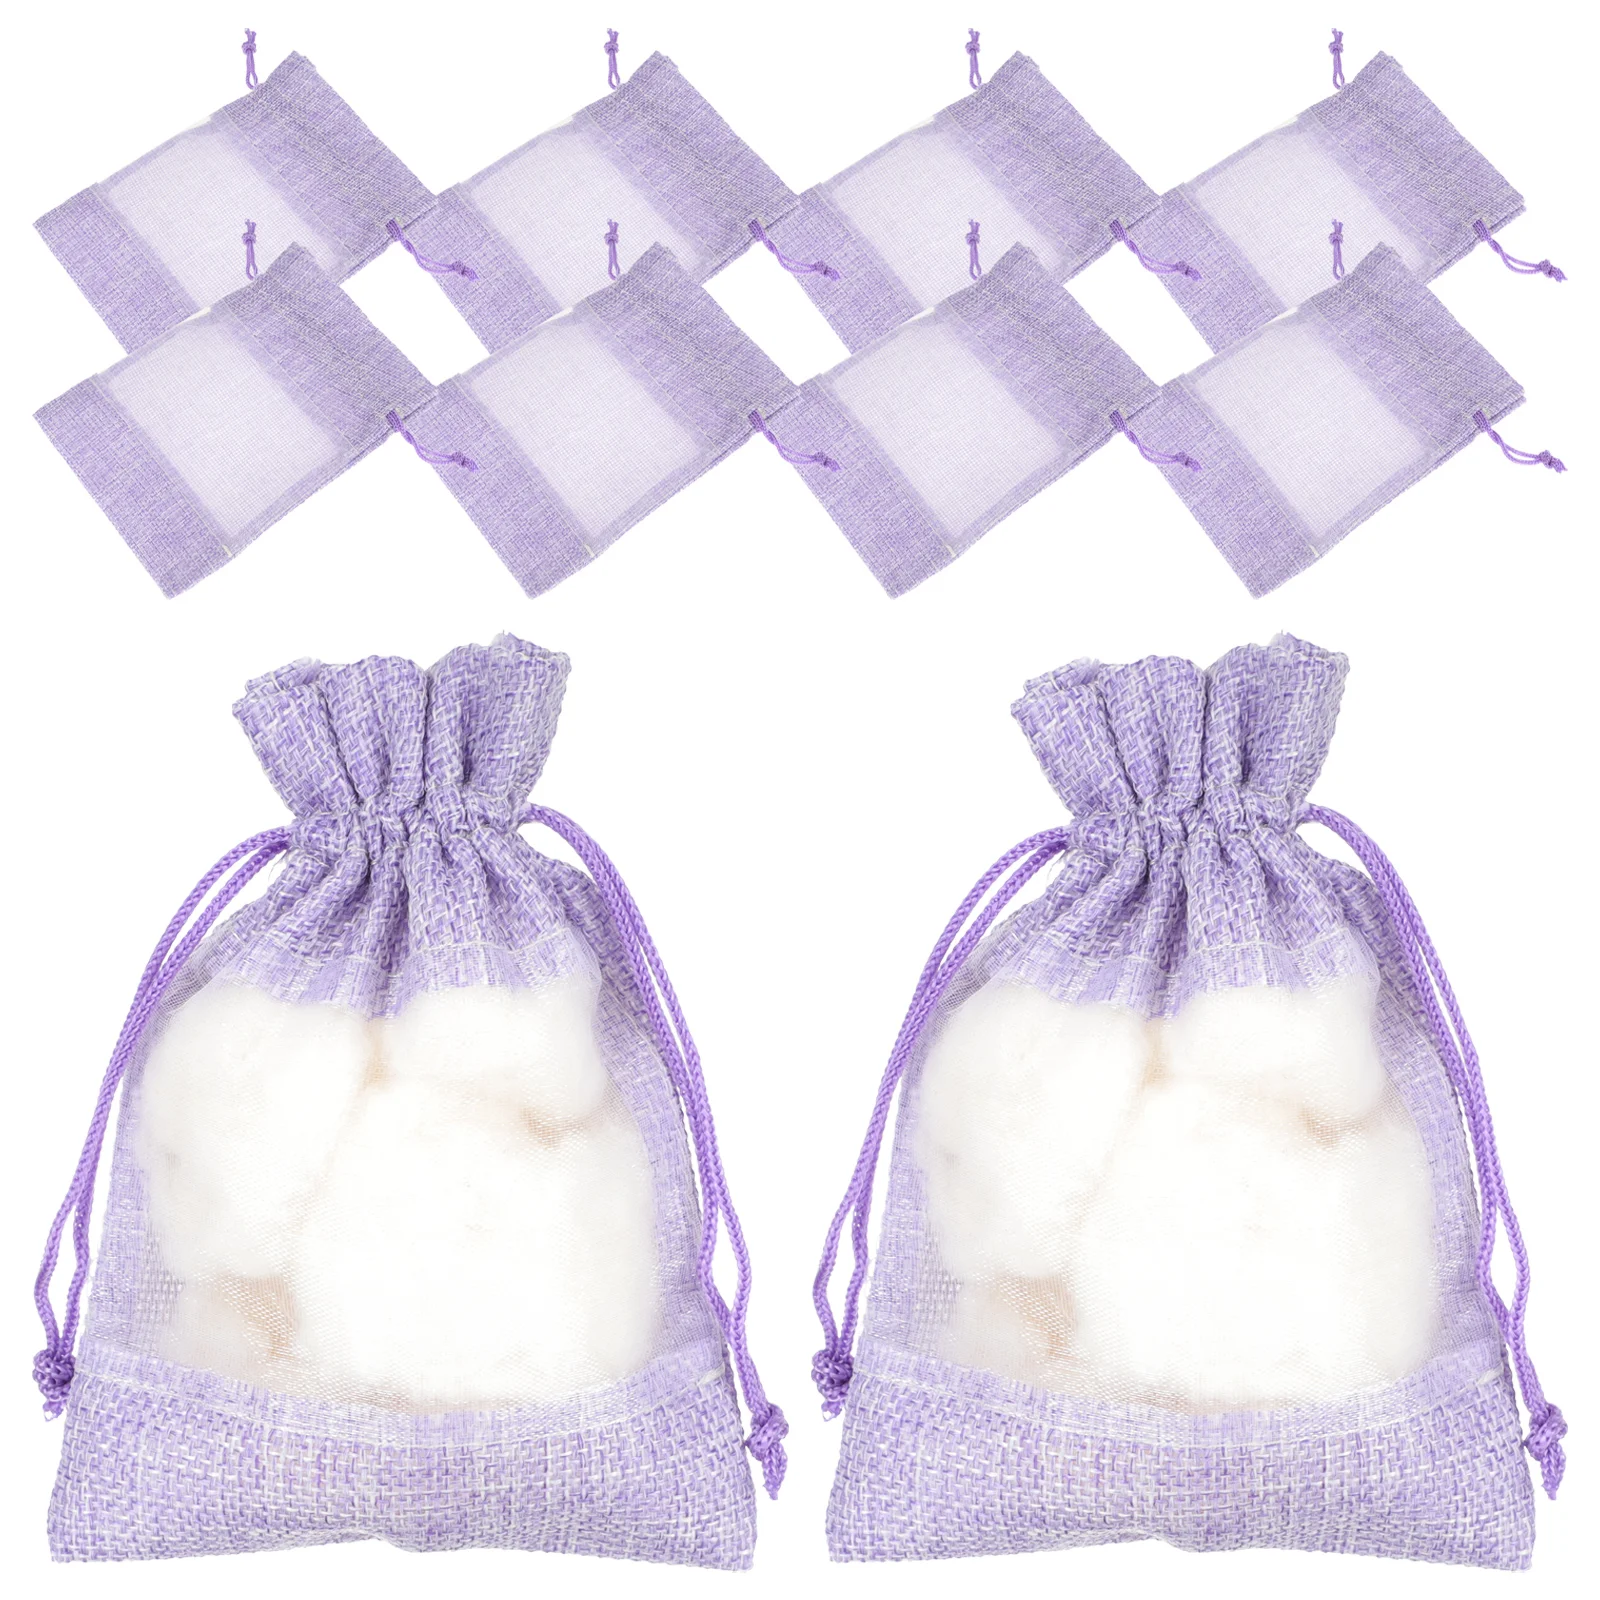 

10 Pcs Lavender Sachet Bag Wardrobe Bags Gift Sachets Empty Pouch Cloth Fragrance